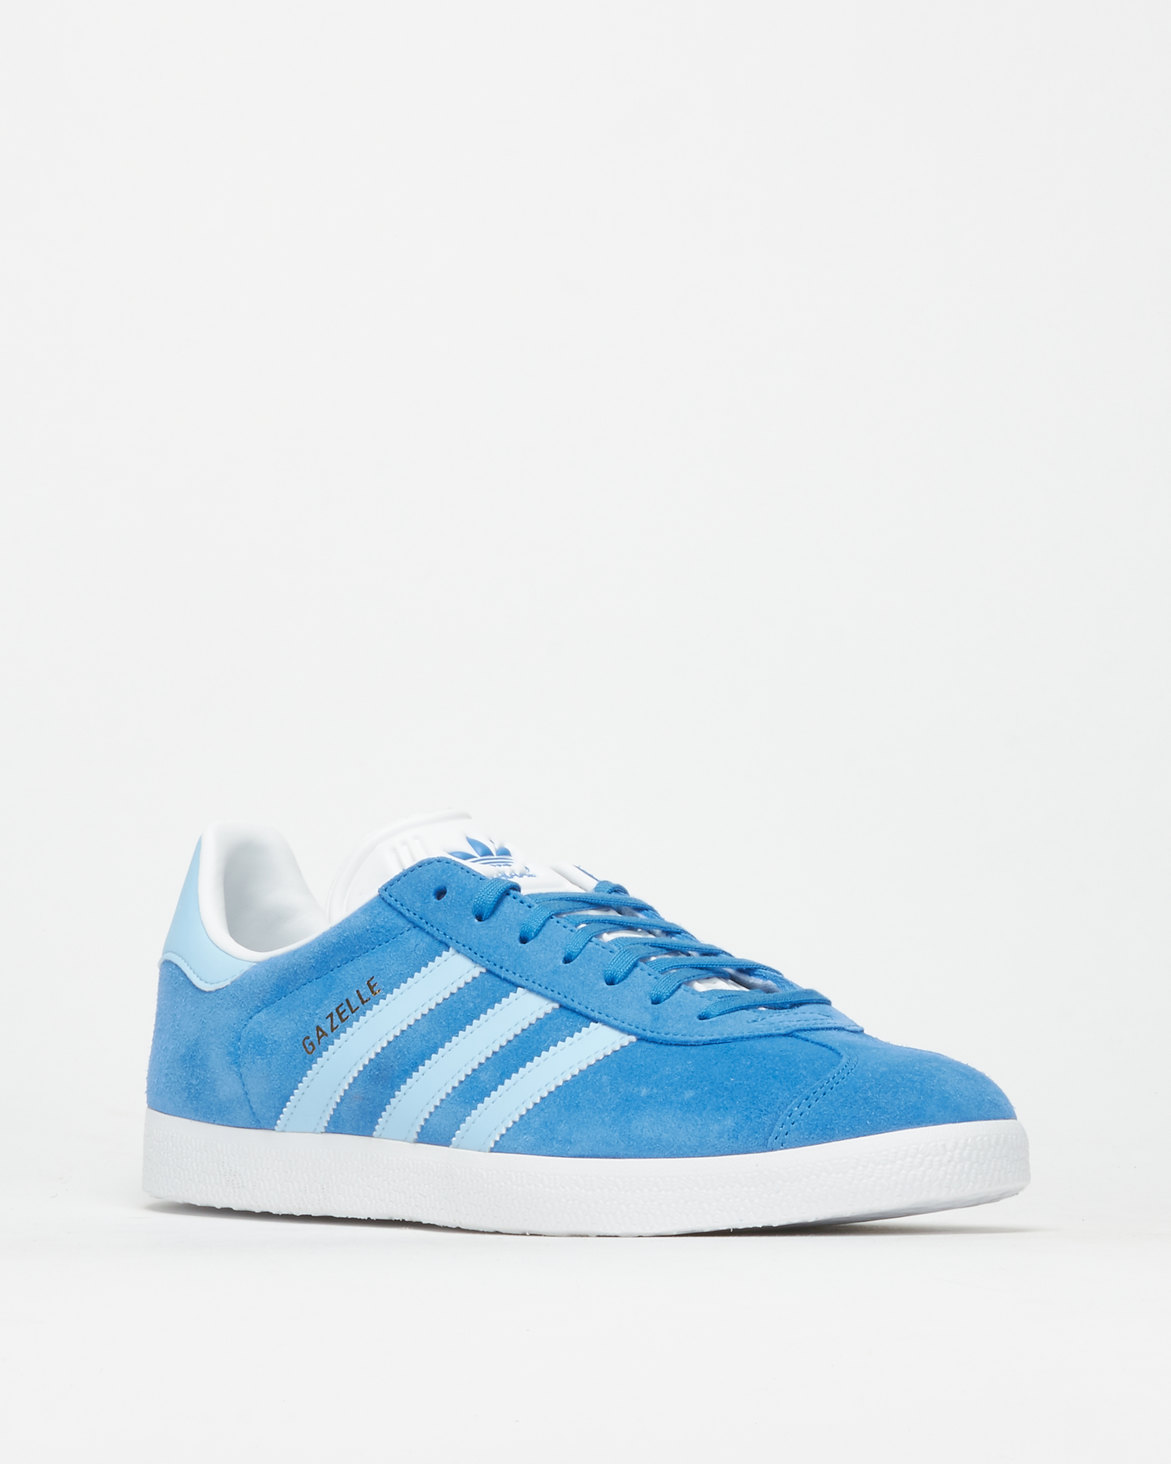 adidas Originals Gazelle Sneakers Blue/White | Zando